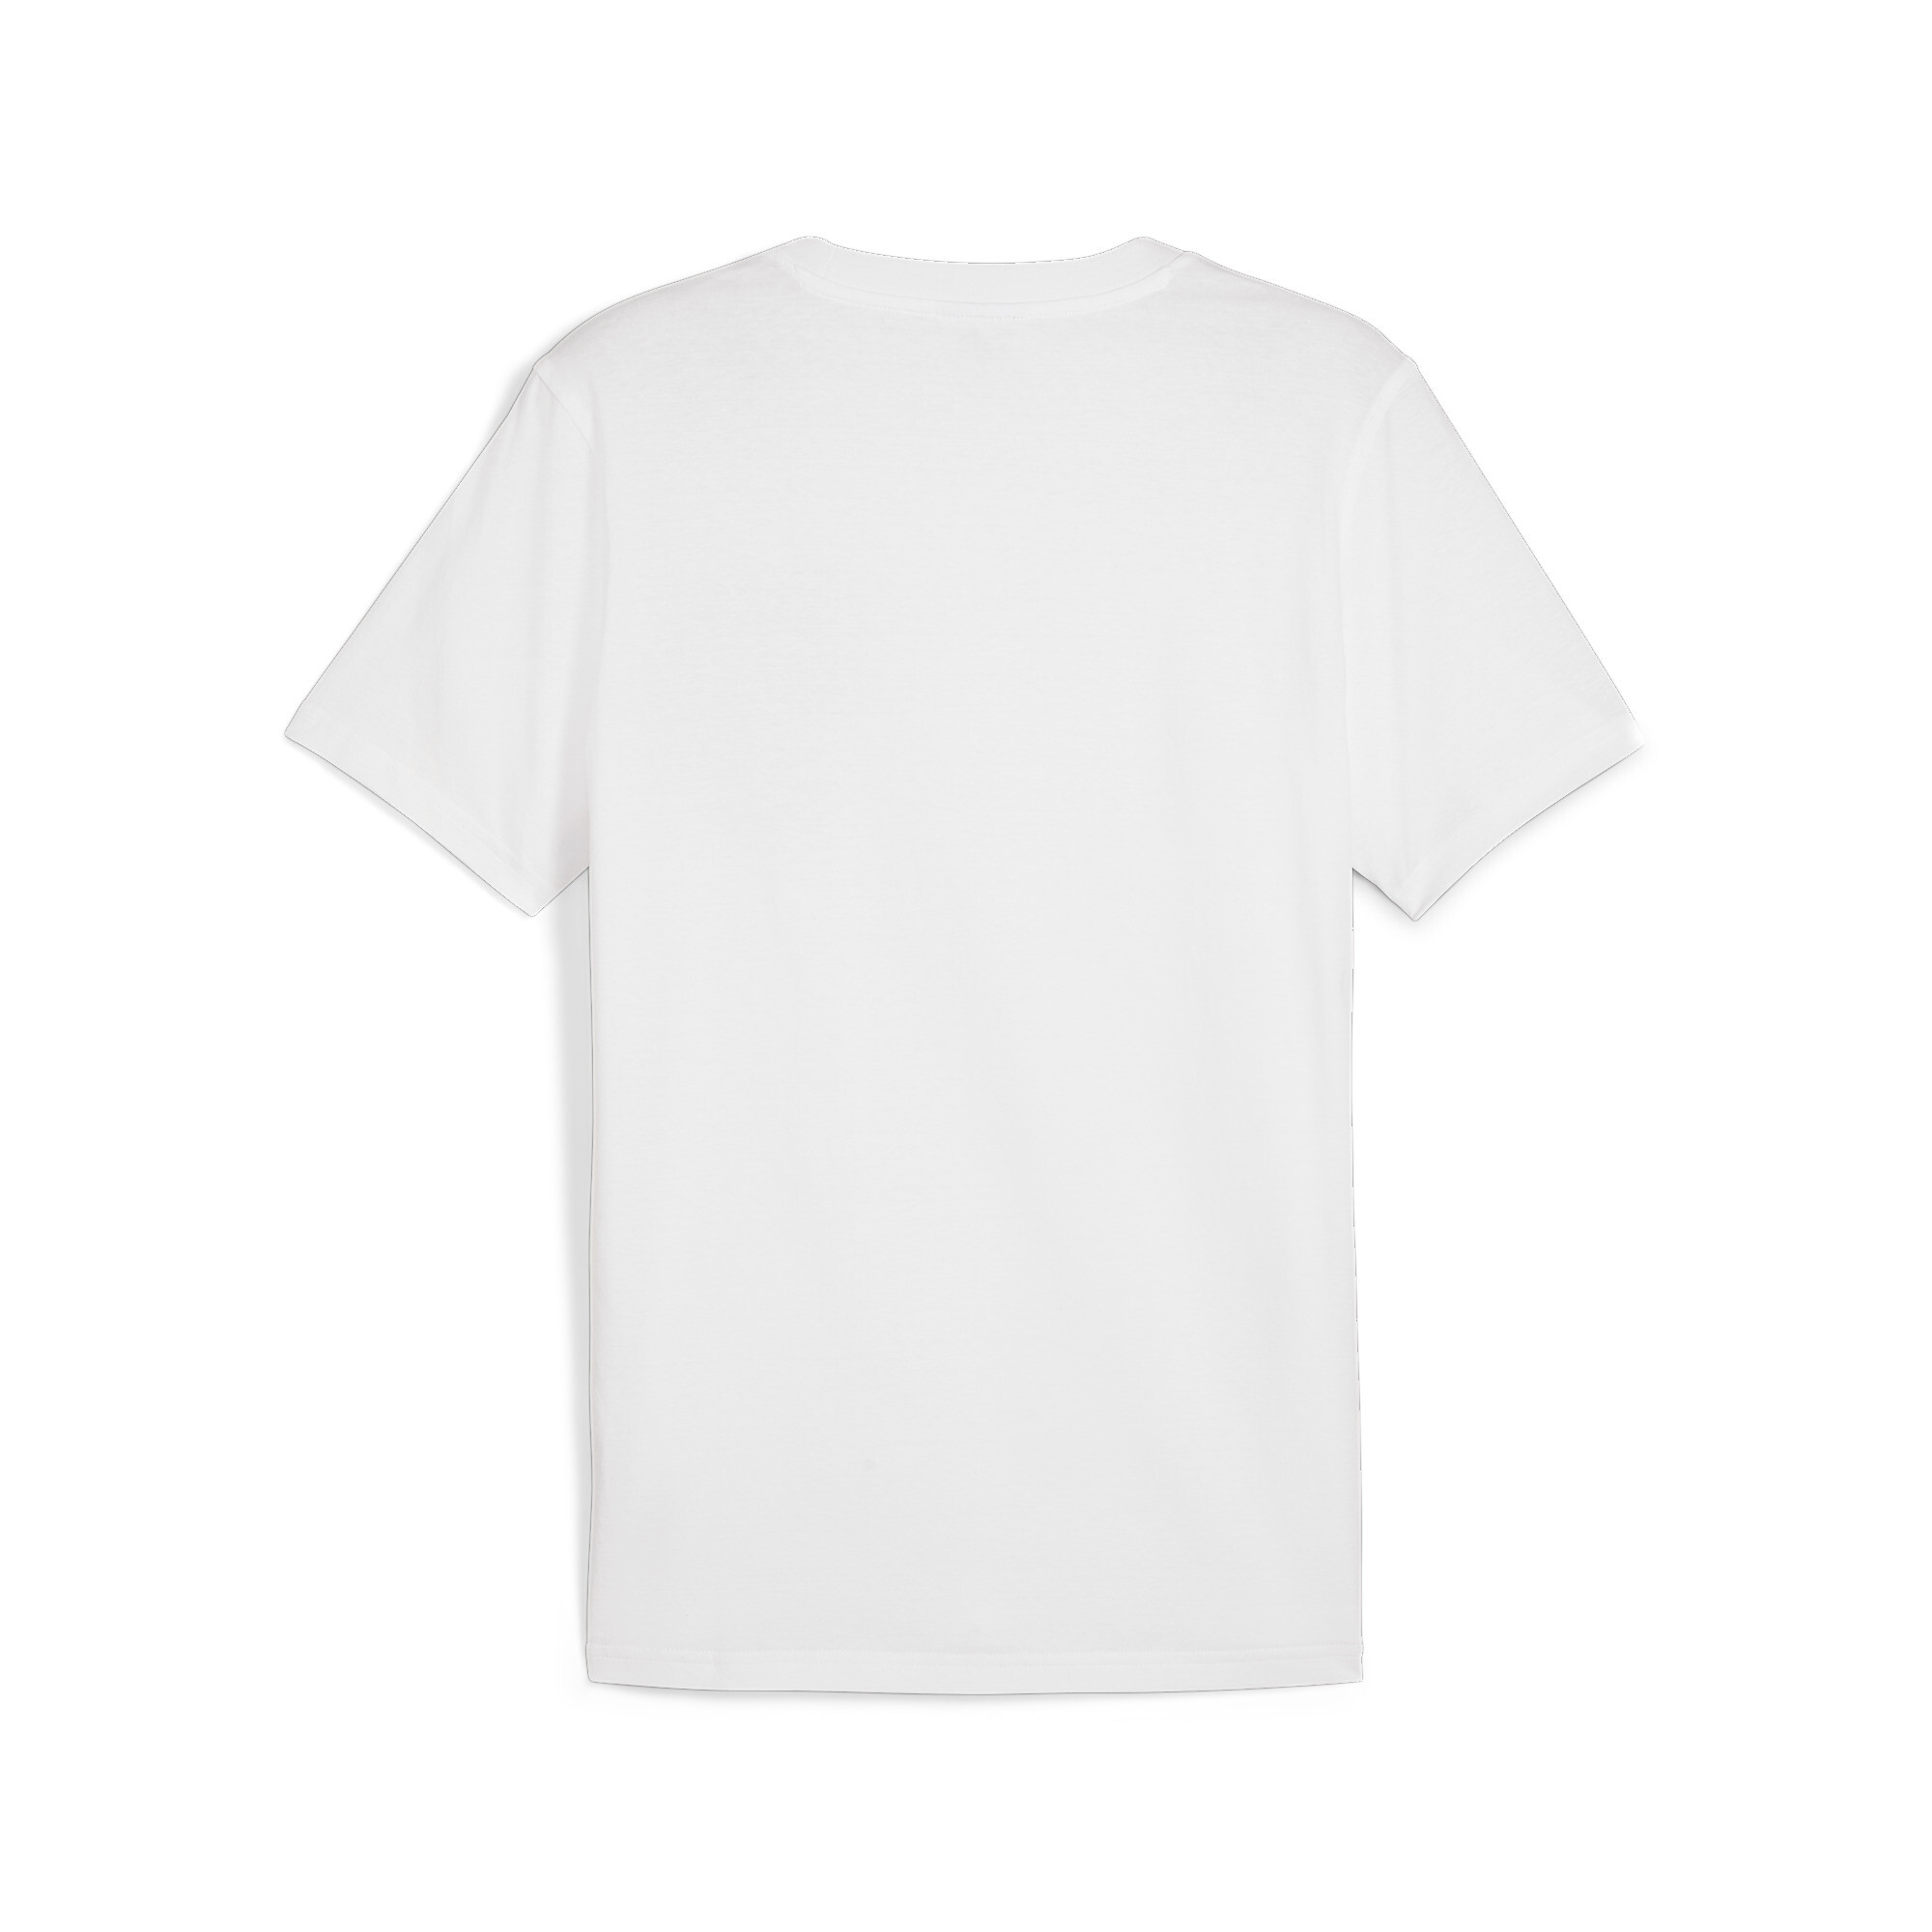 Men's PUMA The Hooper Basketball T-Shirt In White, Size Medium